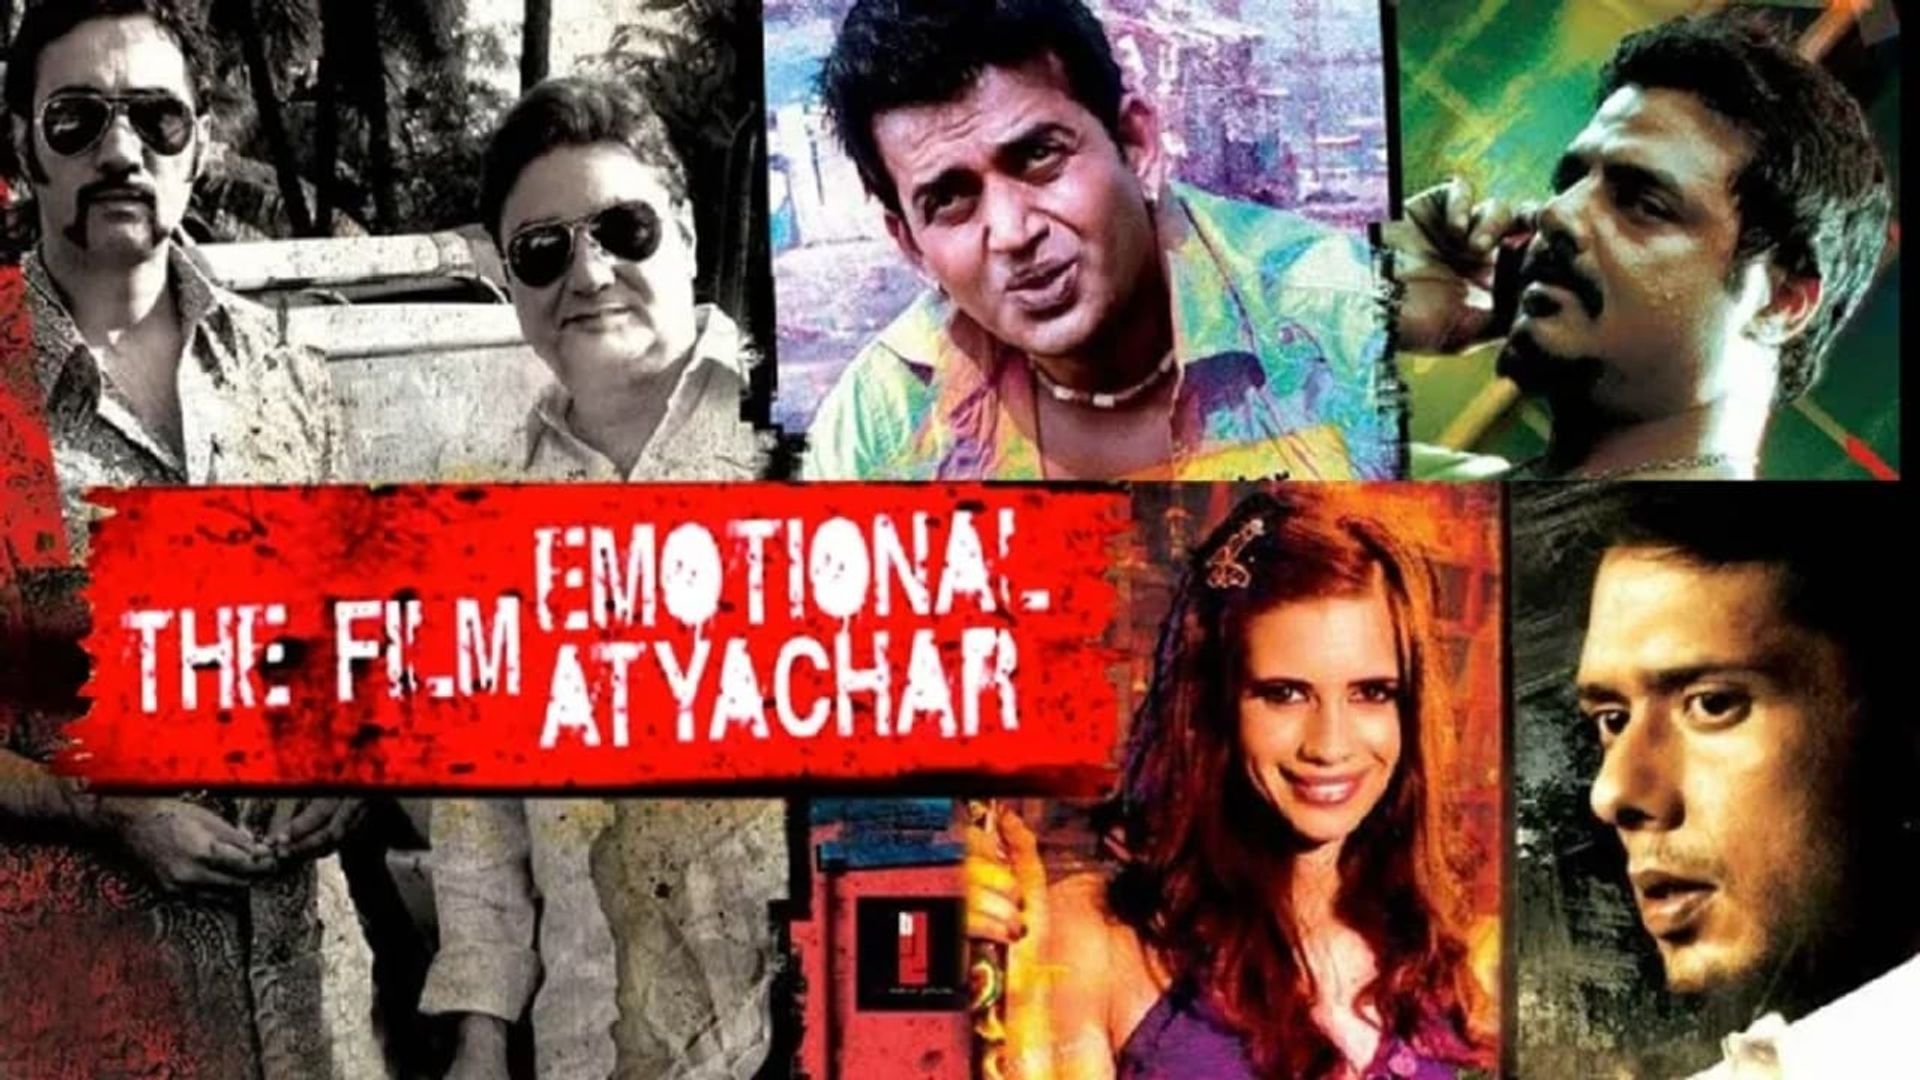 The Film Emotional Atyachar background